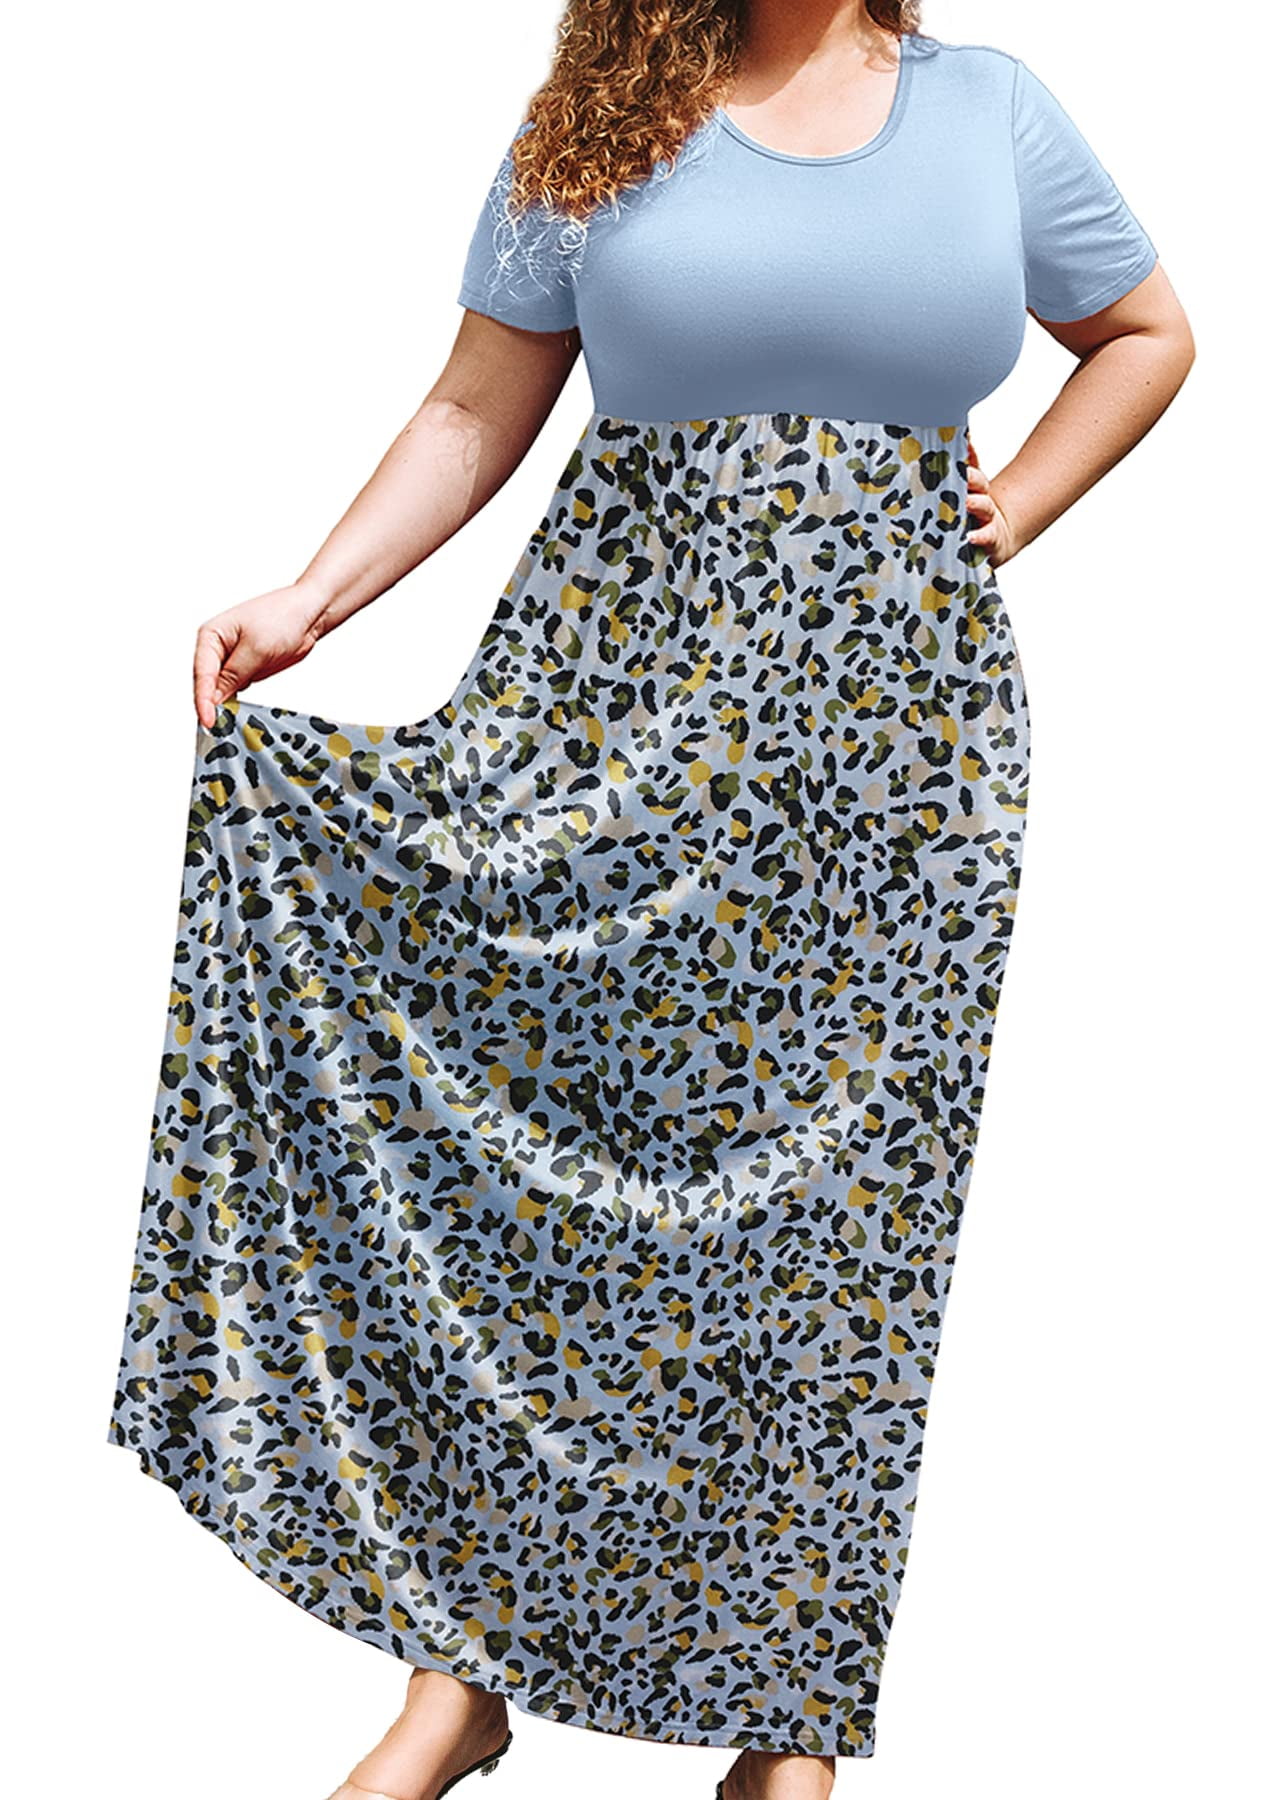 SHOWMALL Plus Size Summer Maxi Dress for Women Colorful Leopard Spots ...